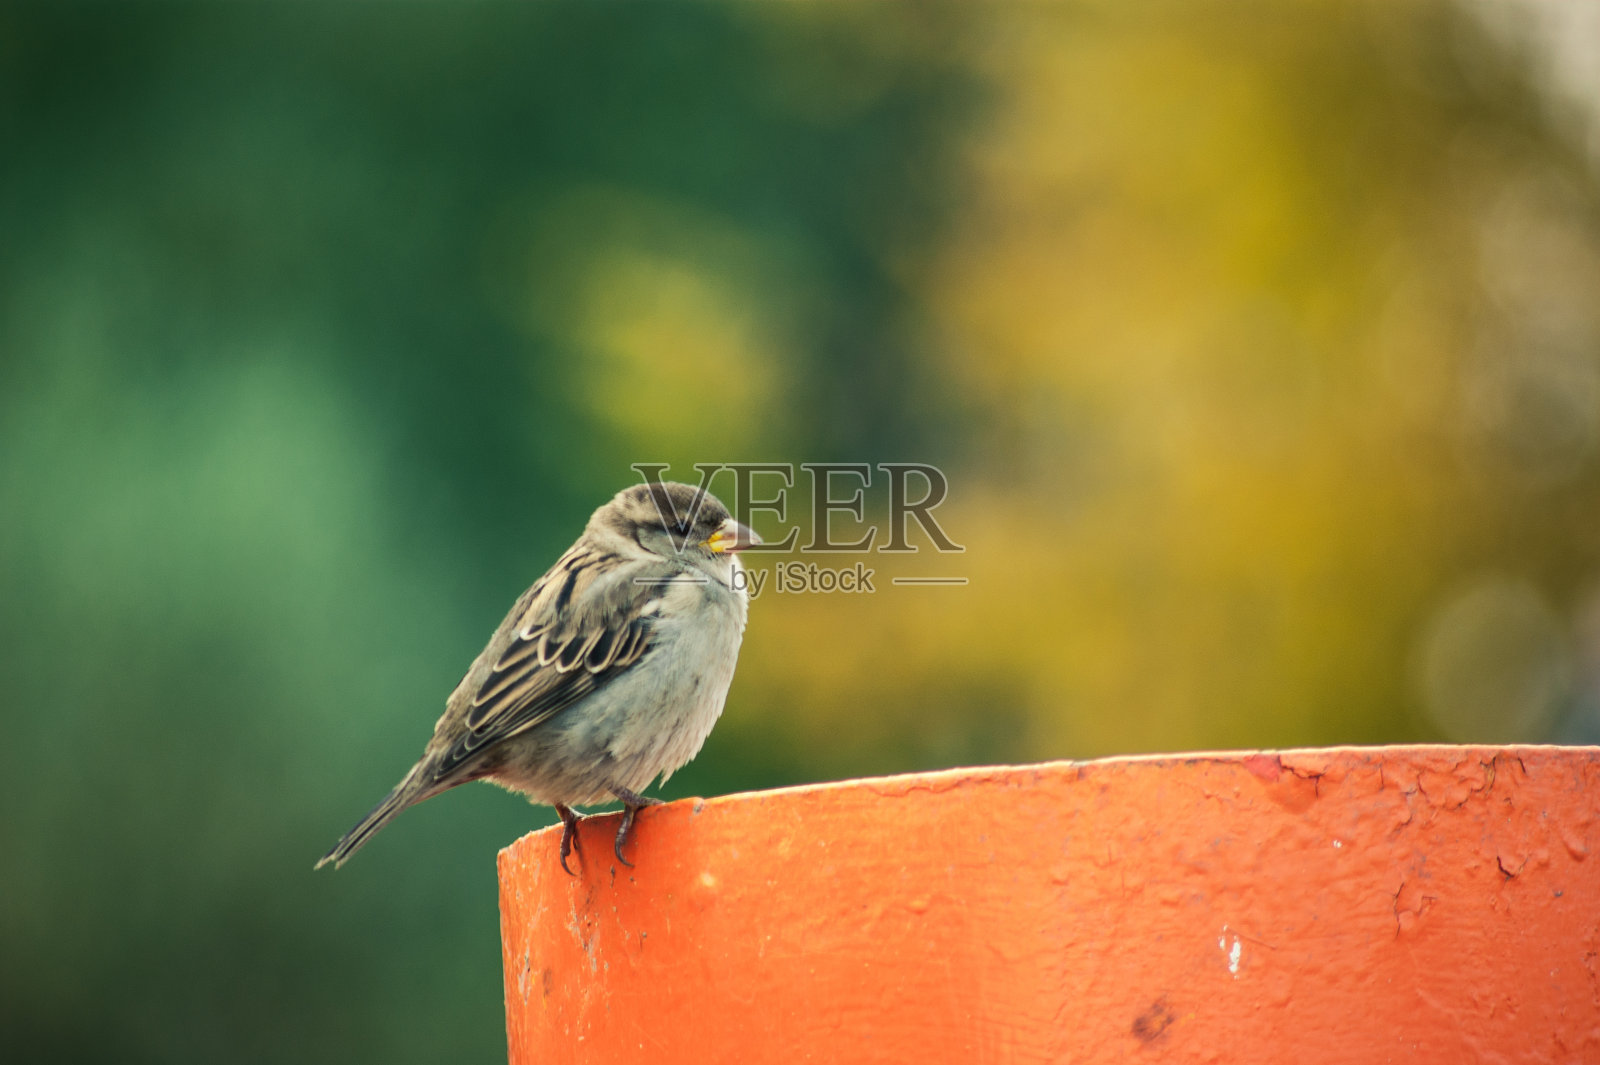 A sparrow照片摄影图片